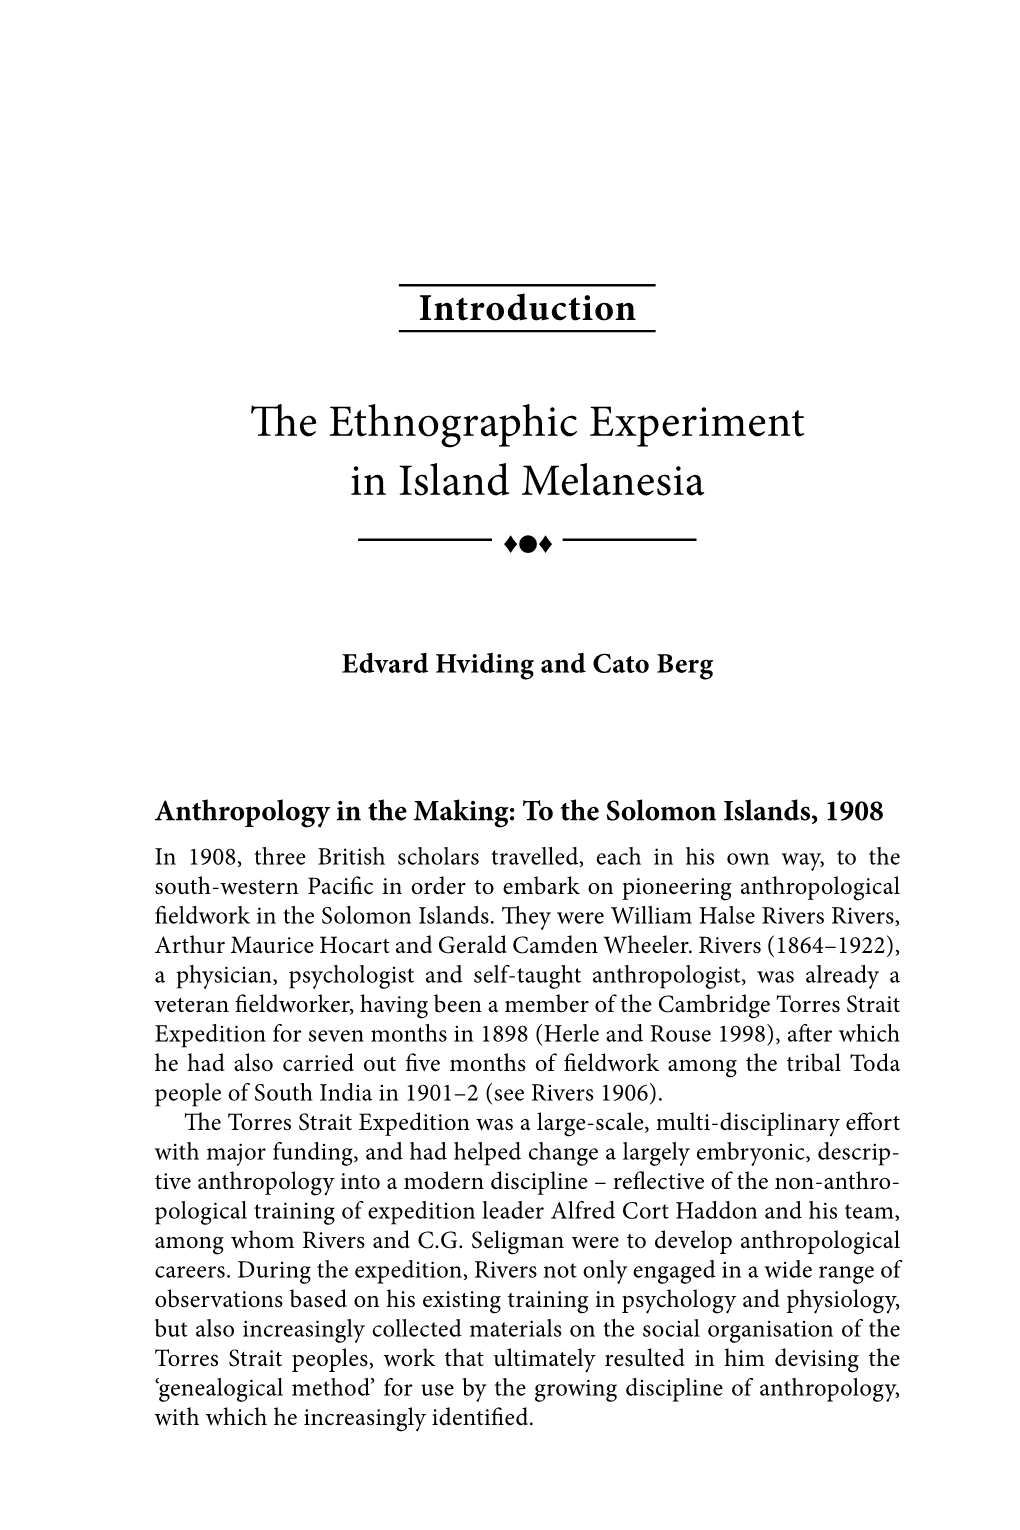 The Ethnographic Experiment in Island Melanesia ♦L♦